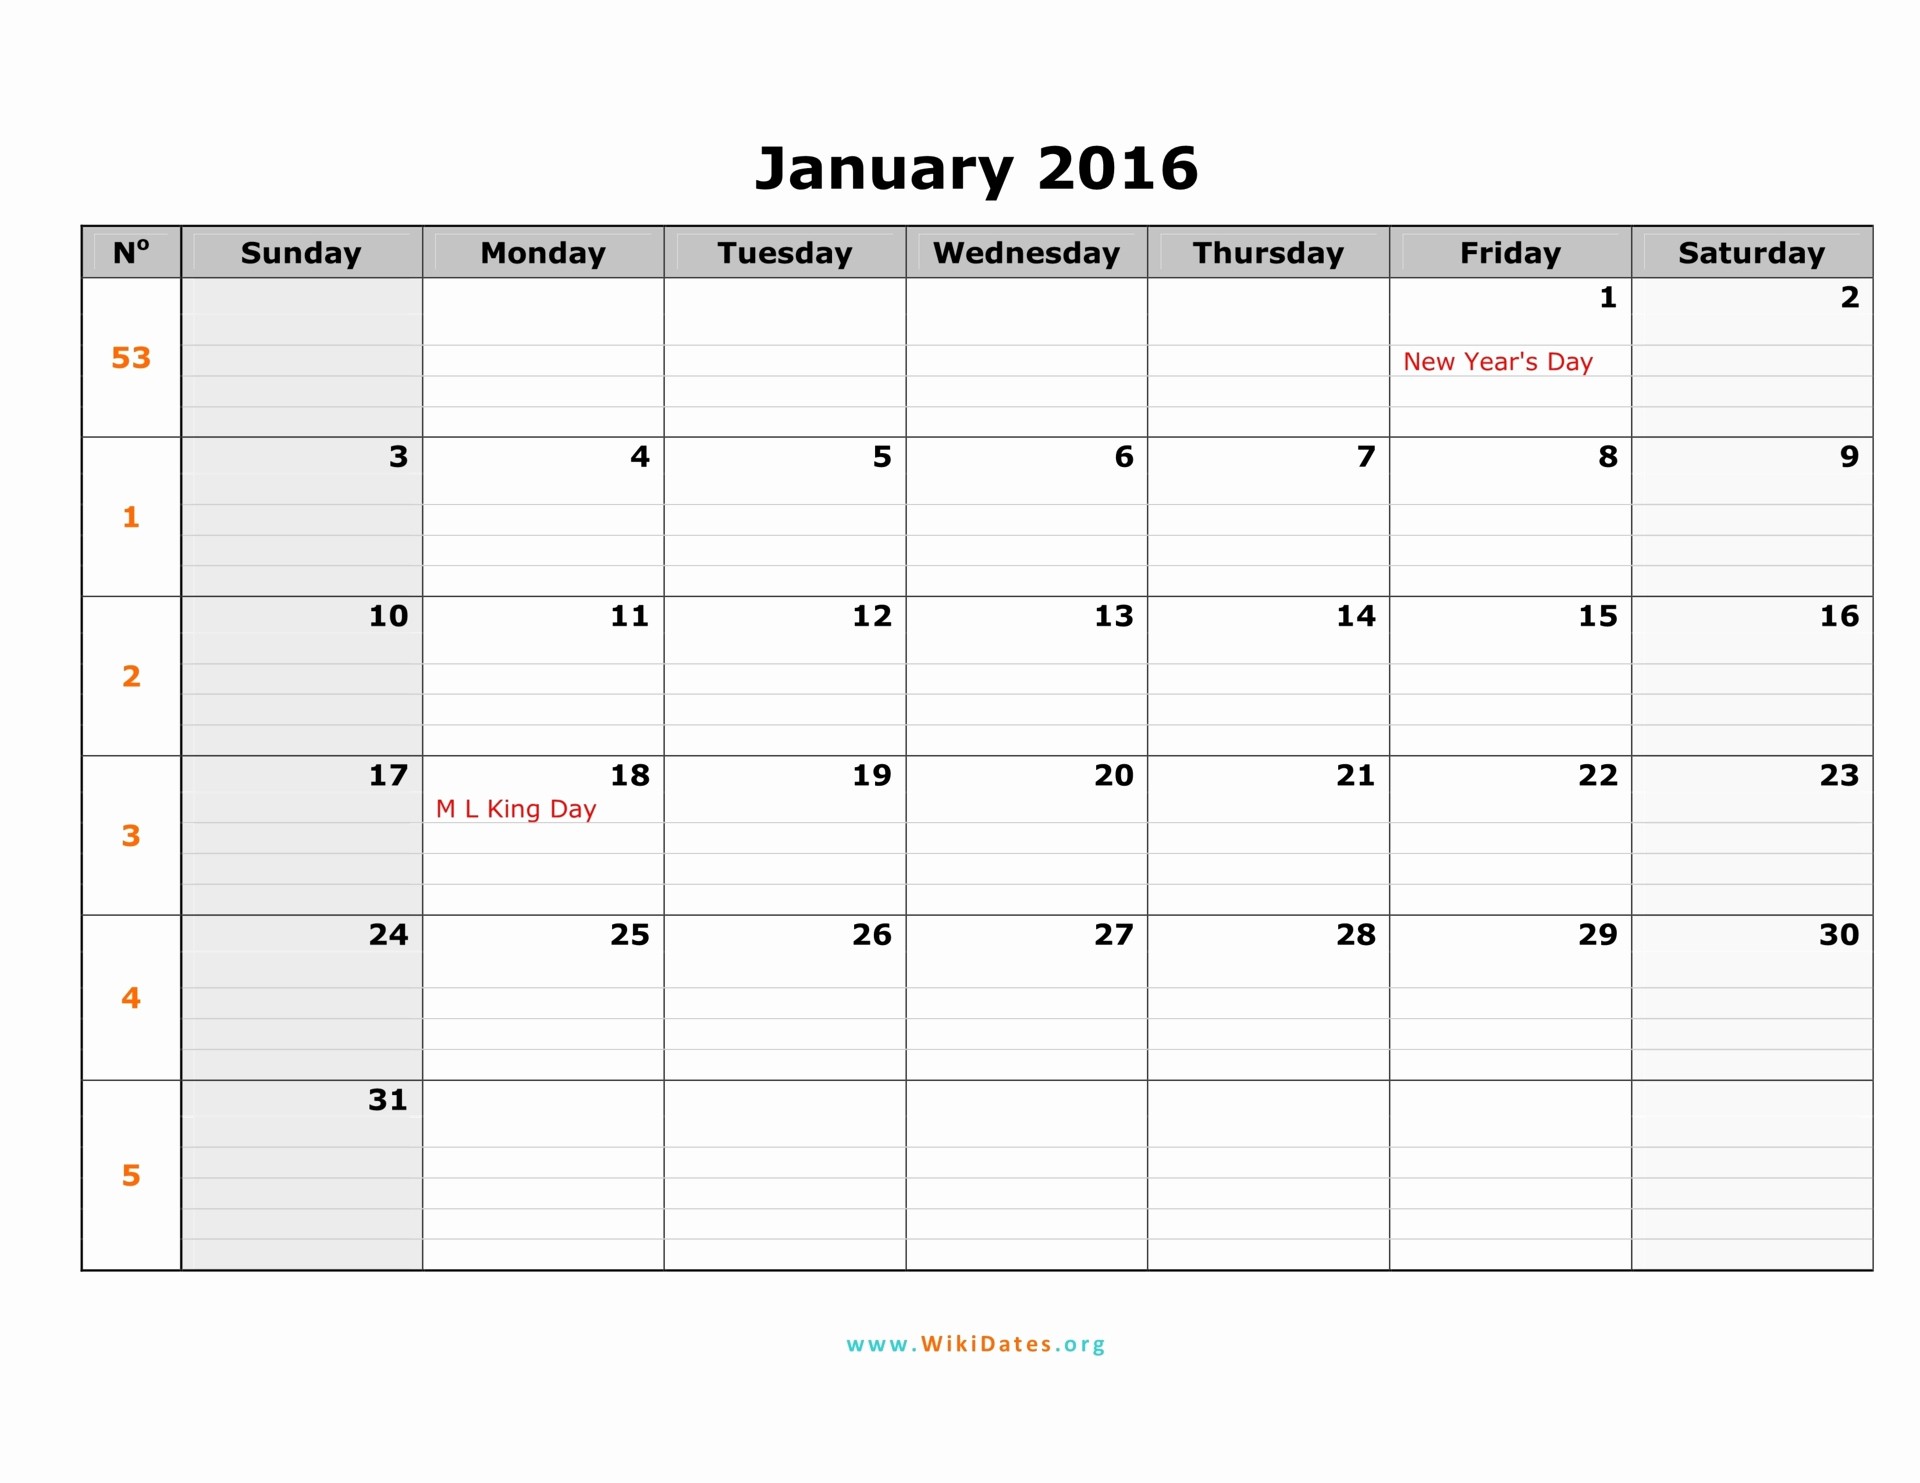 January 2016 Calendar Template Word Inspirational January 2016 Calendar